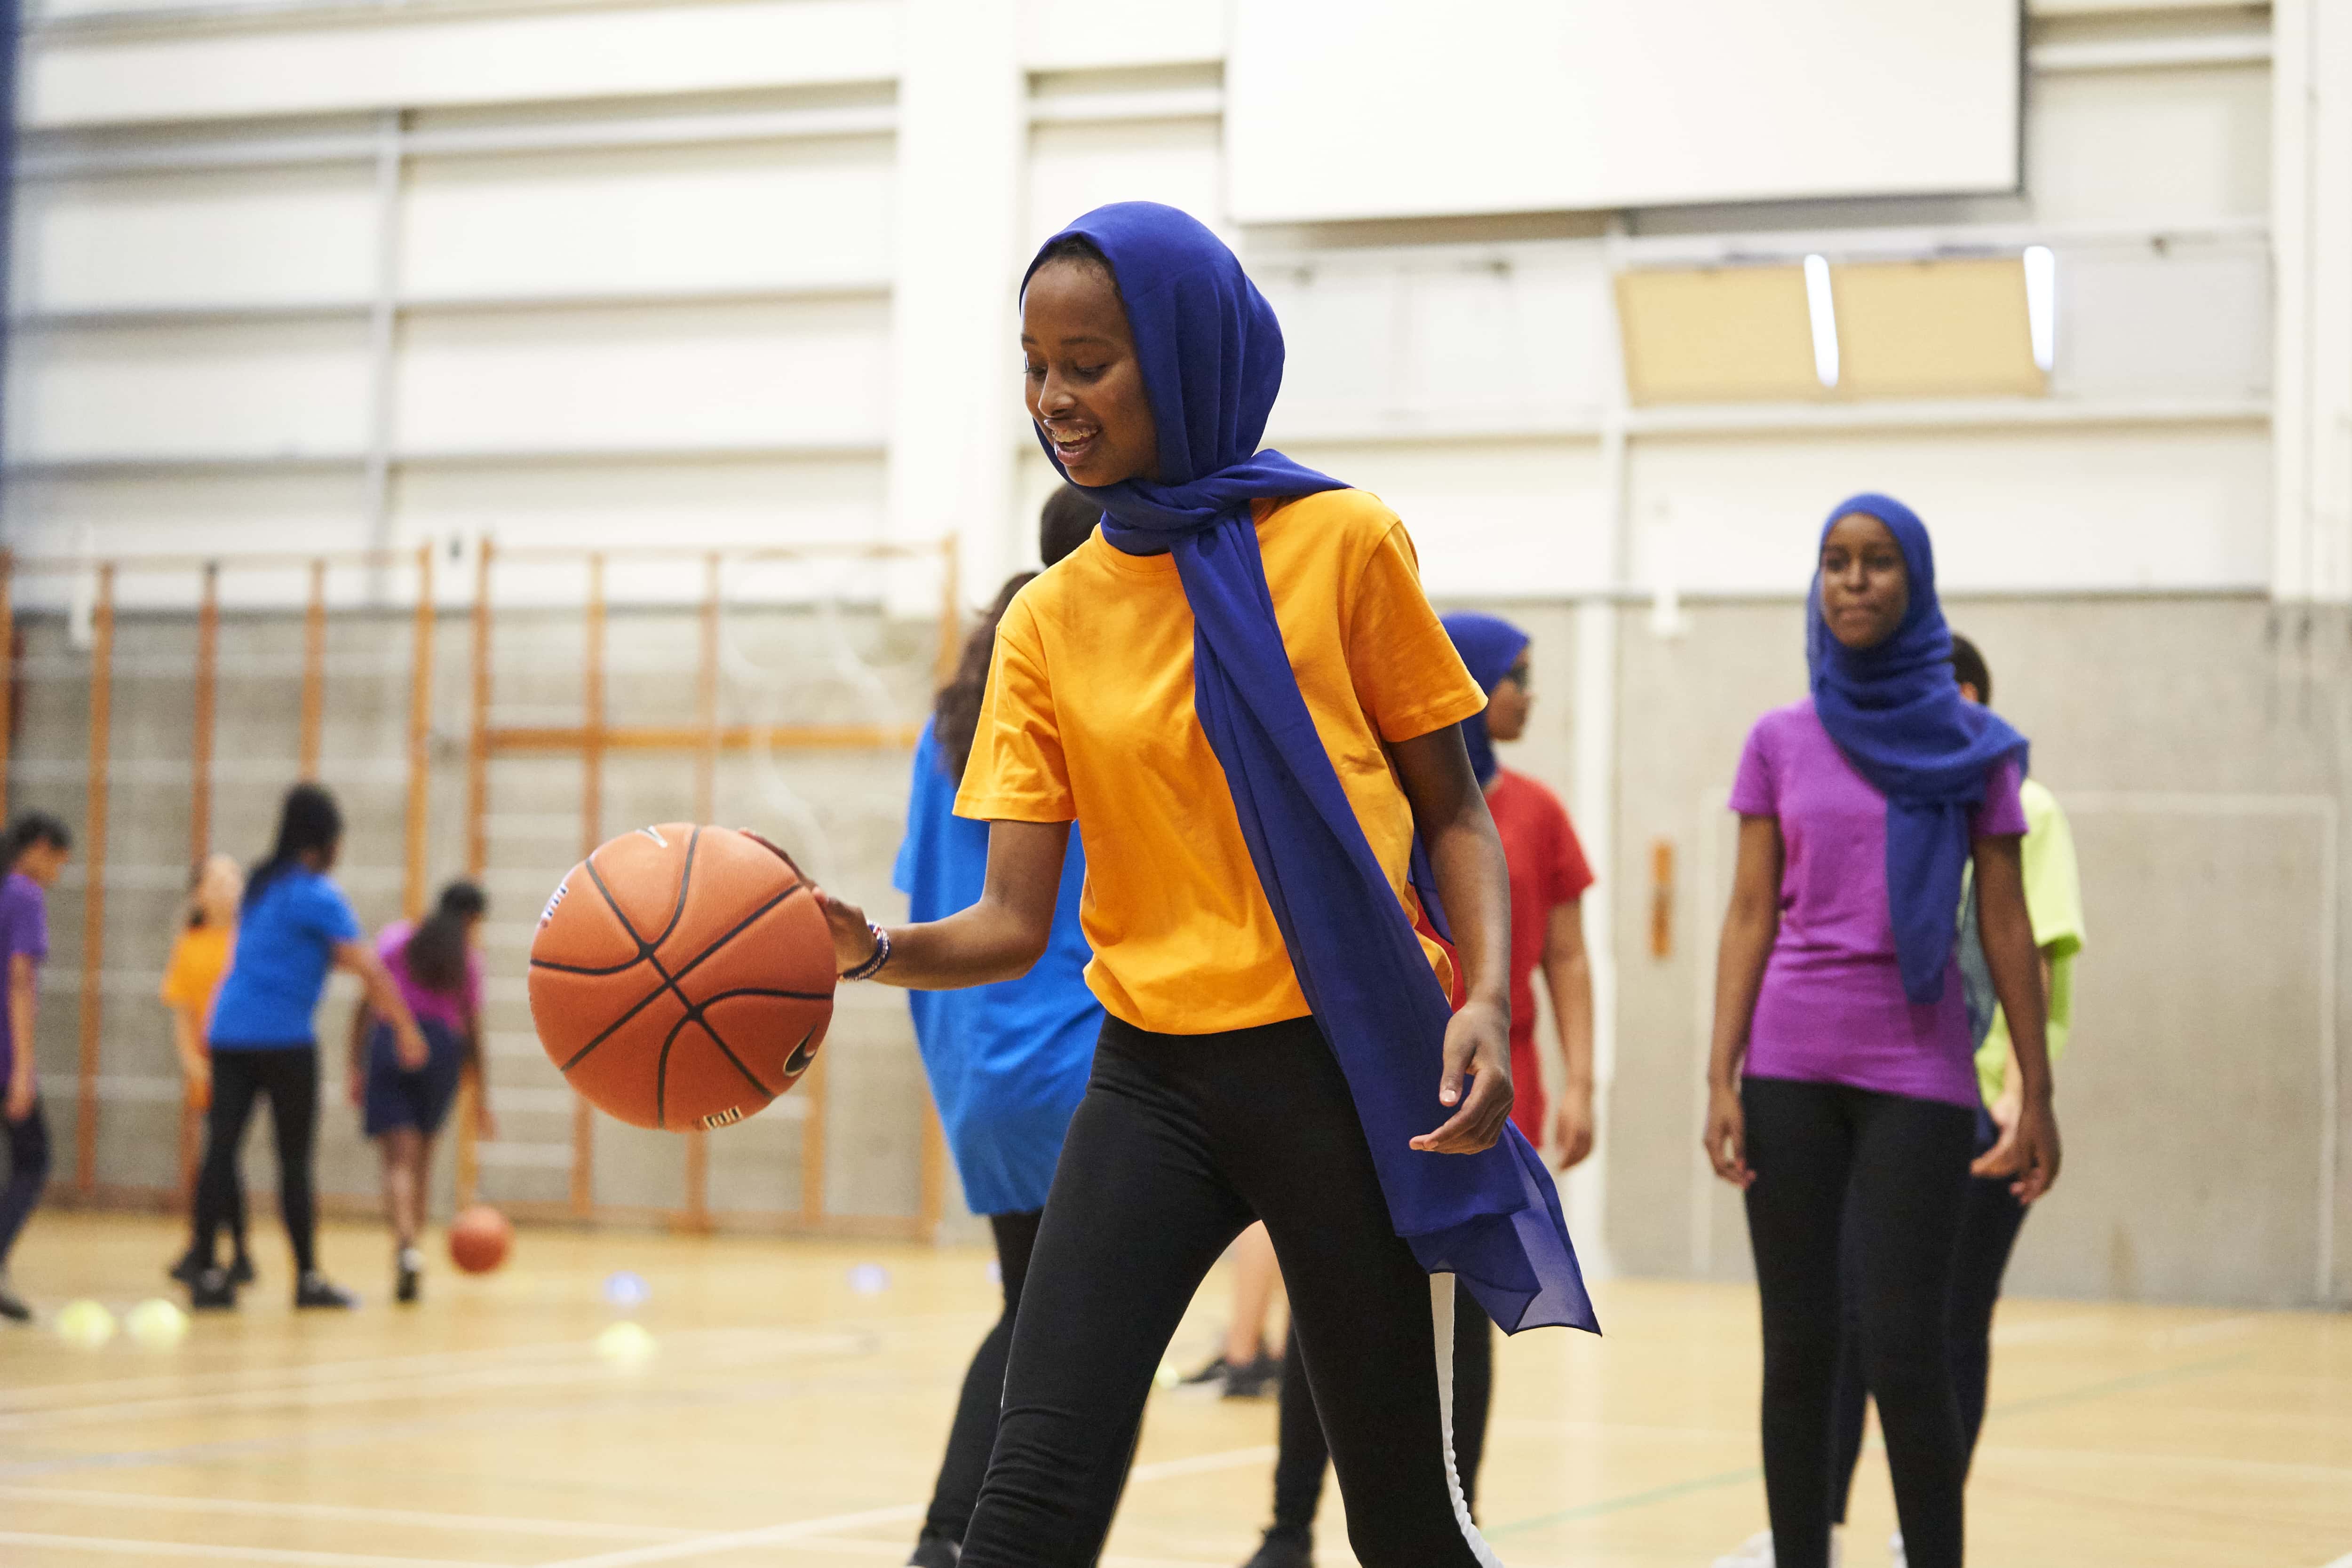 Girl wearing head scarf dribbling basketball